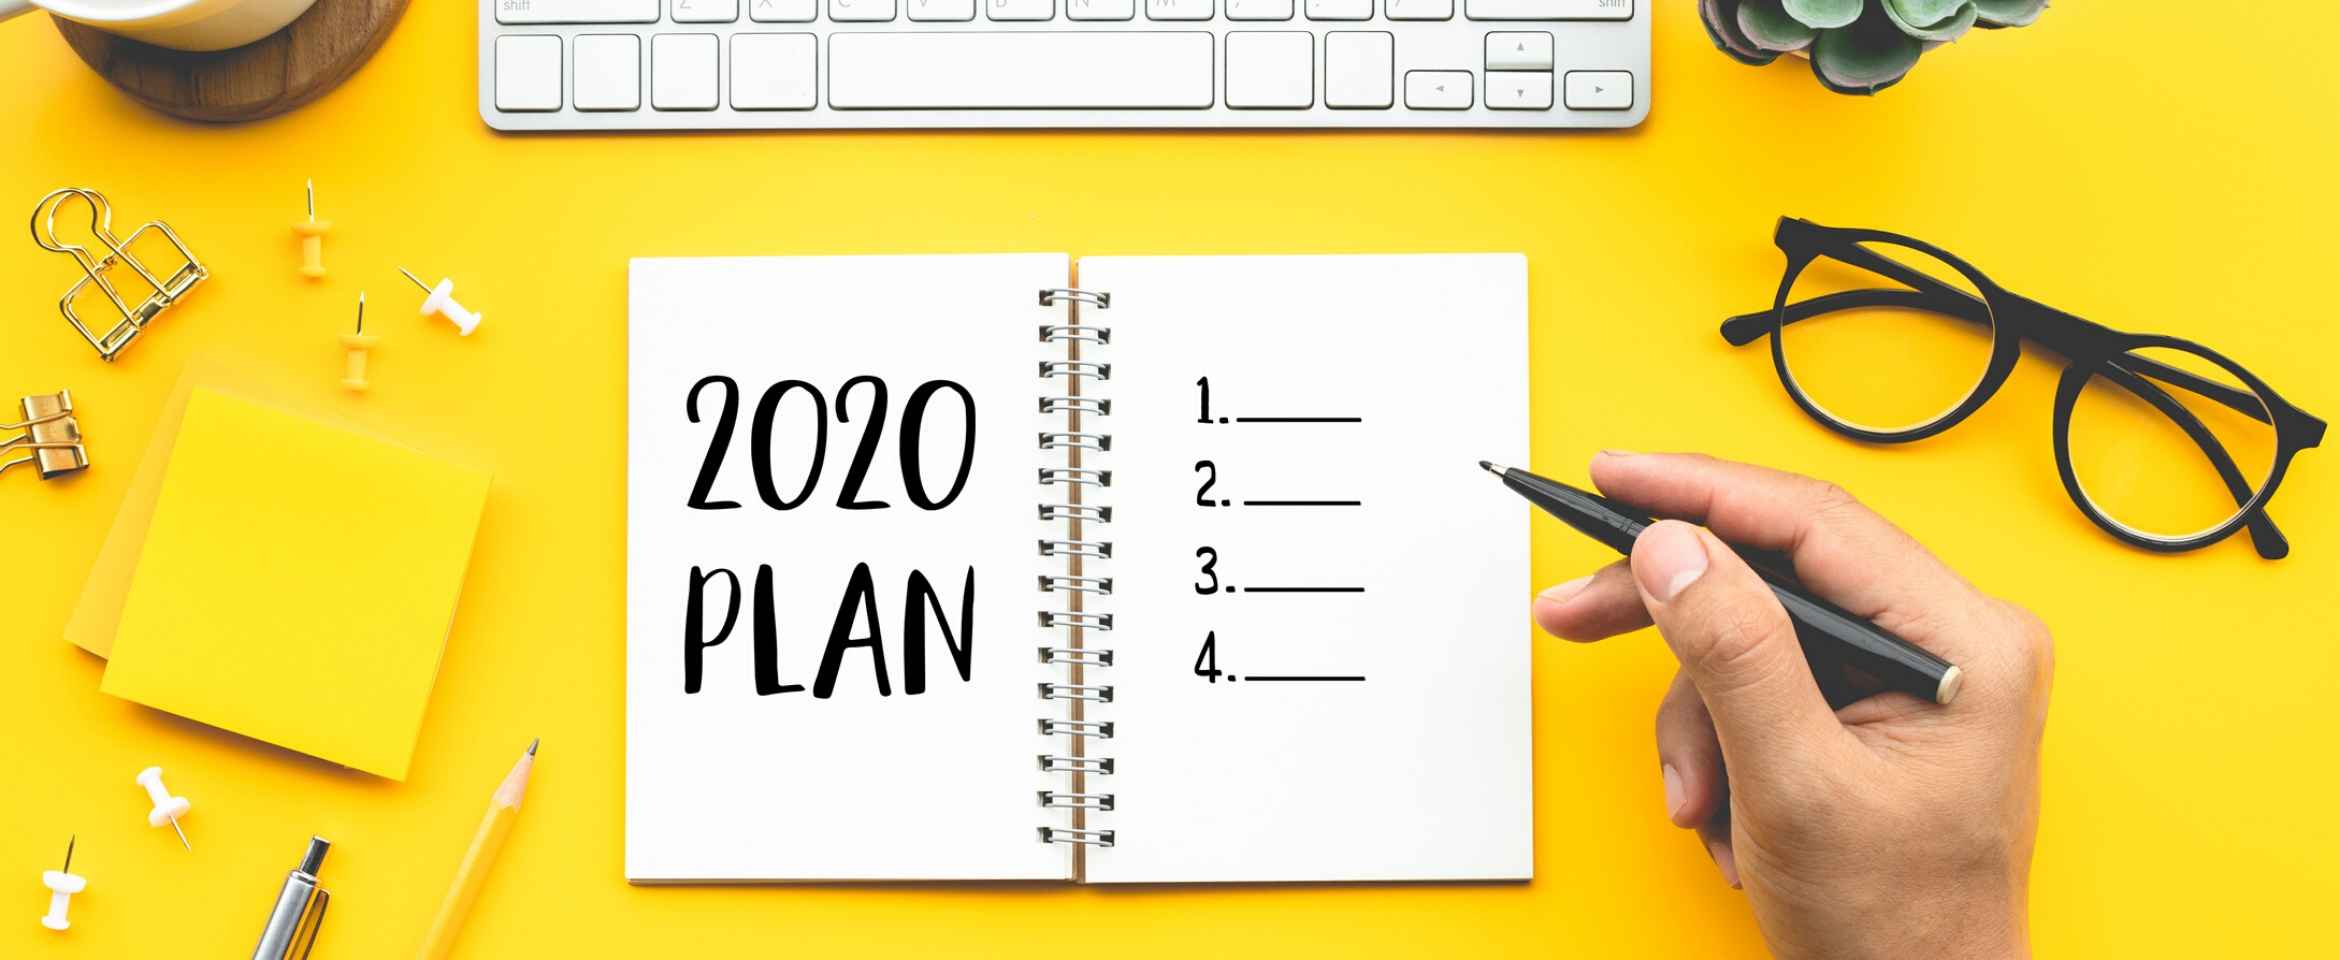 Digital Marketing: your Wish List for 2020